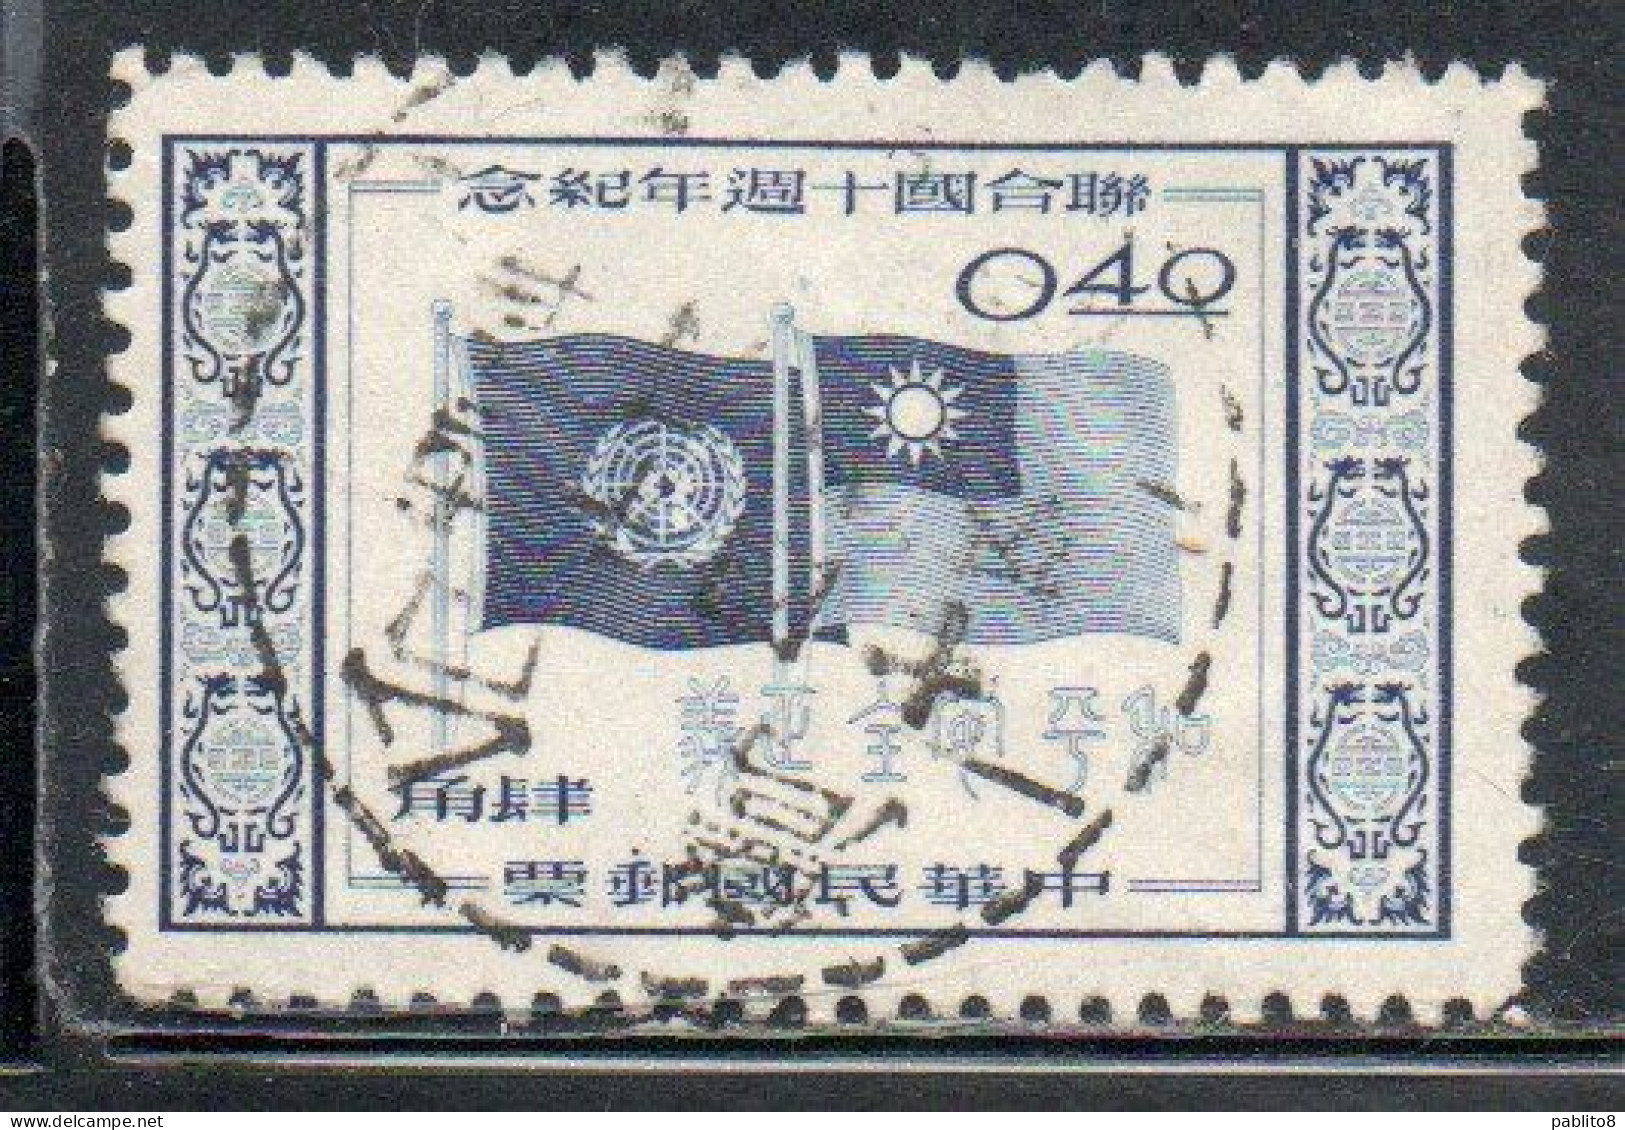 CHINA REPUBLIC CINA TAIWAN FORMOSA 1955 UN ONU ANNIVERSARY FLAGS 40c USED USATO OBLITERE' - Gebraucht